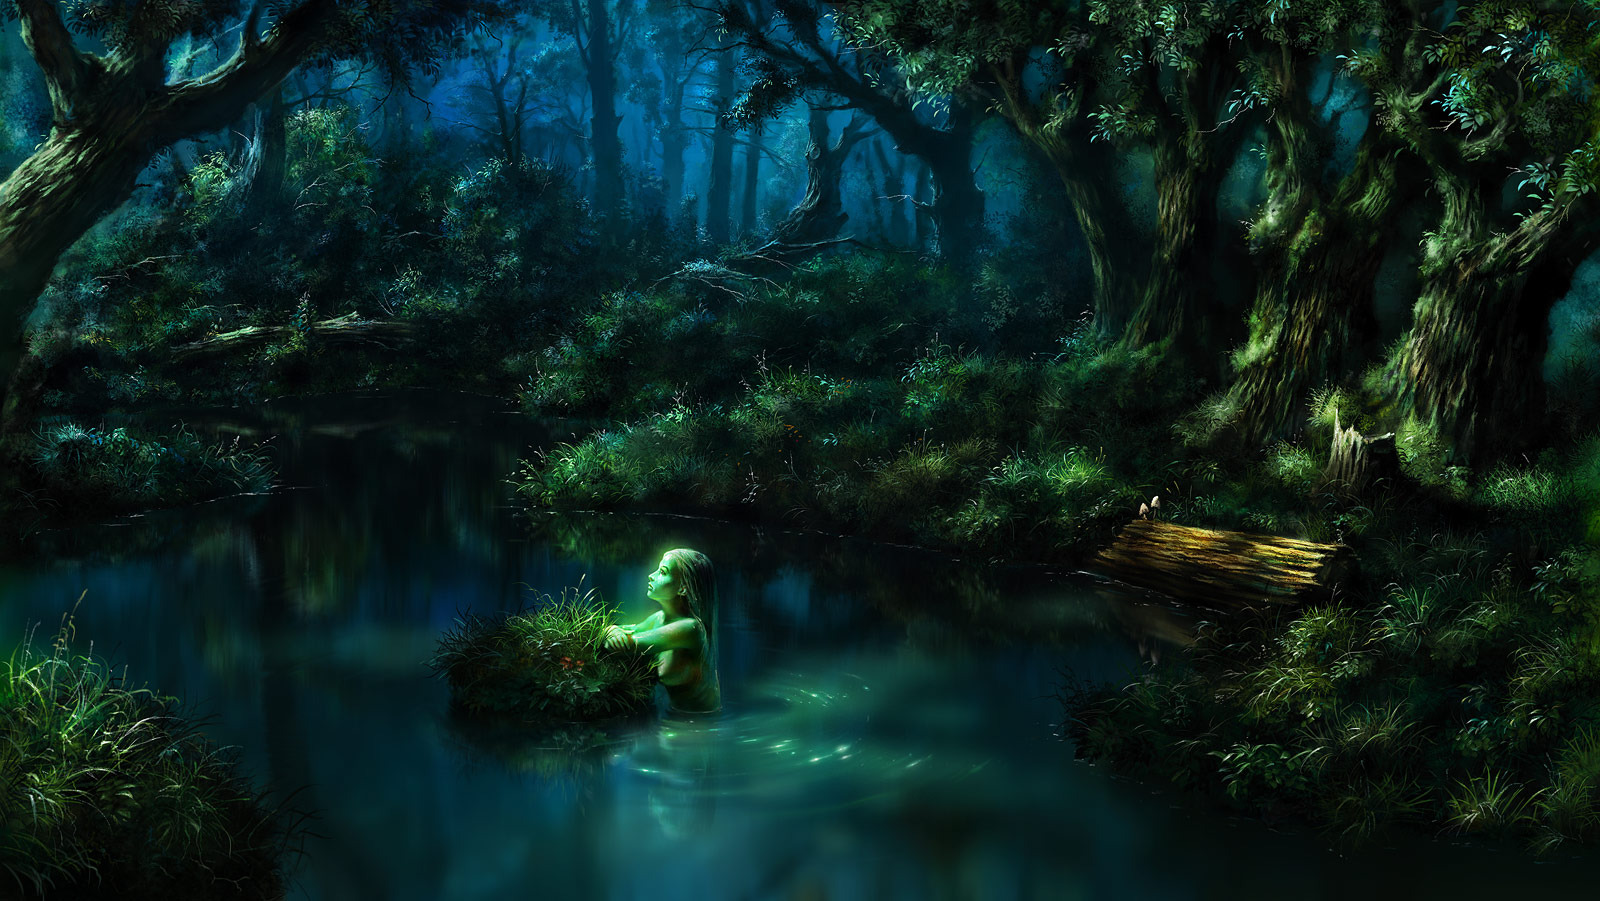 1600x901_15162_Night_Memories_2d_fantasy_landscape_game_art_mermaid_forest_picture_image_digital_art.jpg